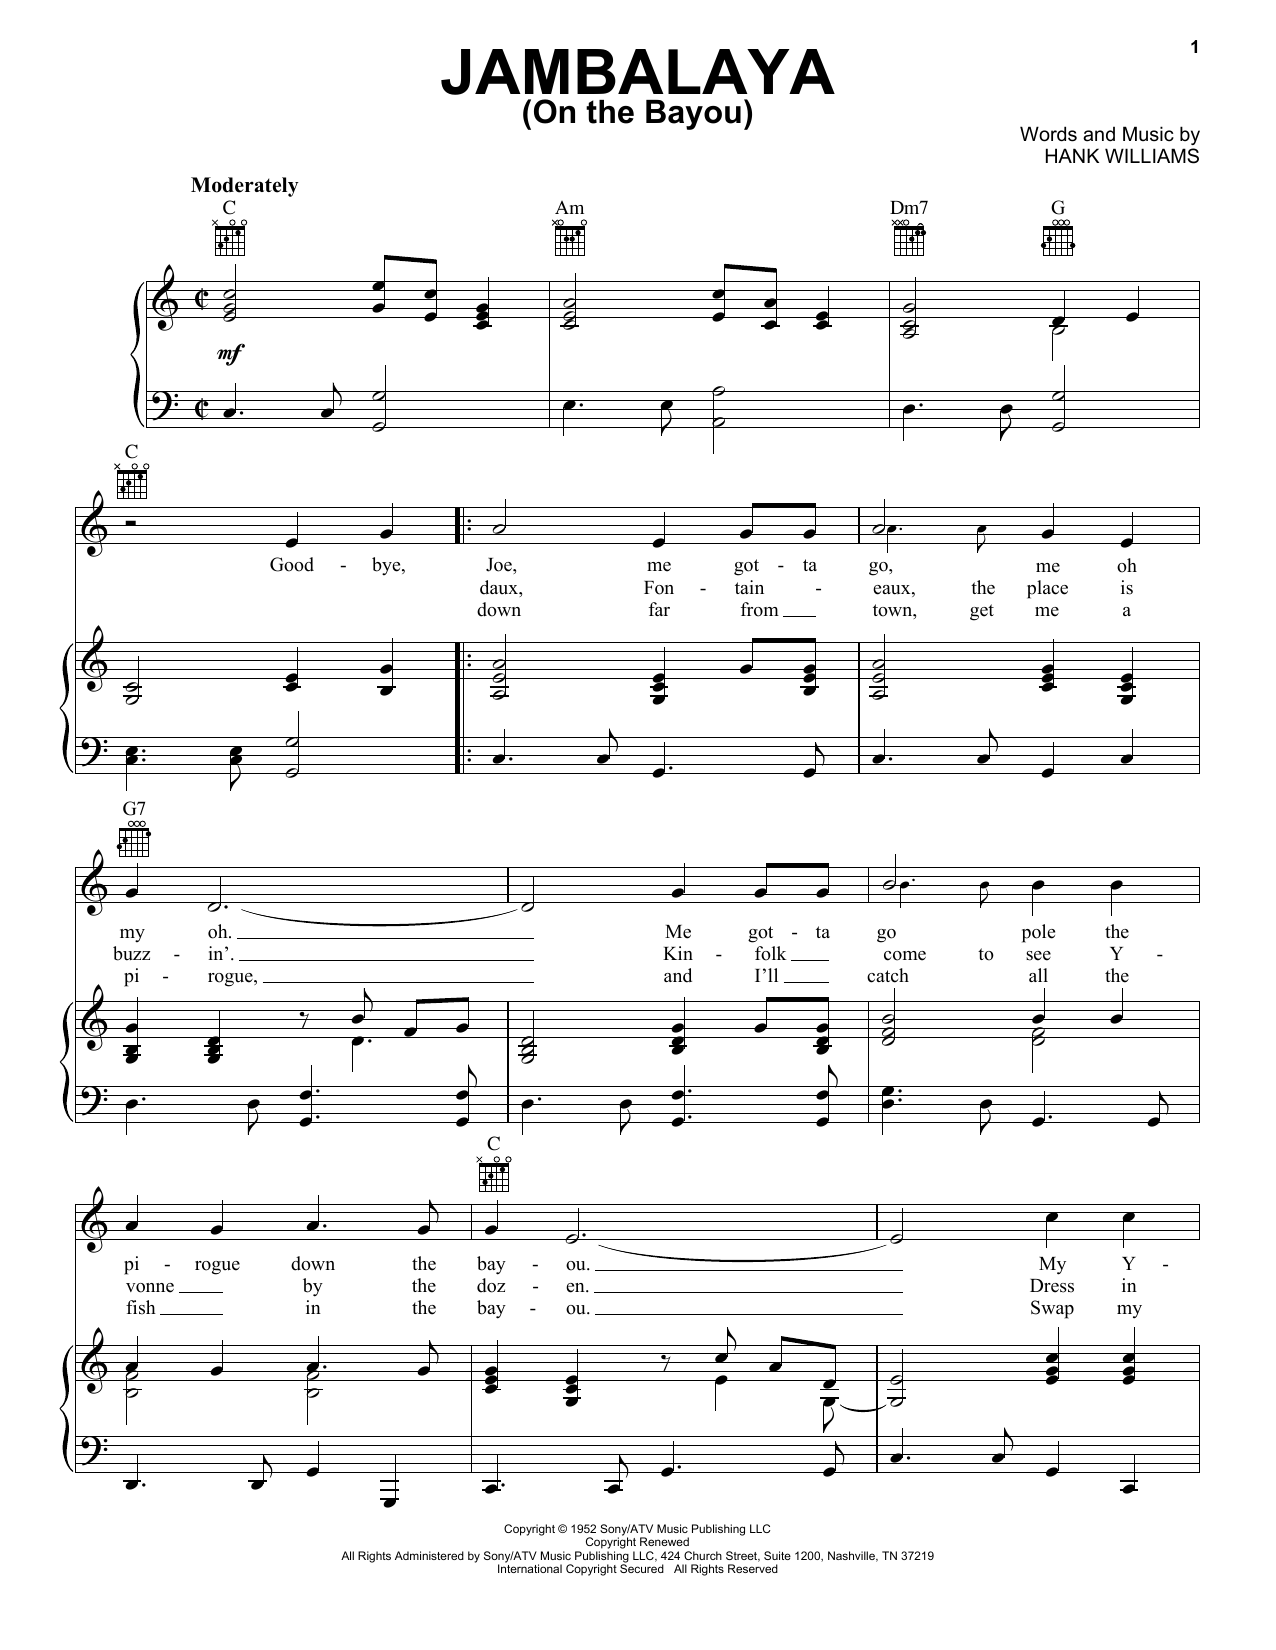 Hank Williams Jambalaya (On The Bayou) Sheet Music Notes & Chords for Ukulele - Download or Print PDF